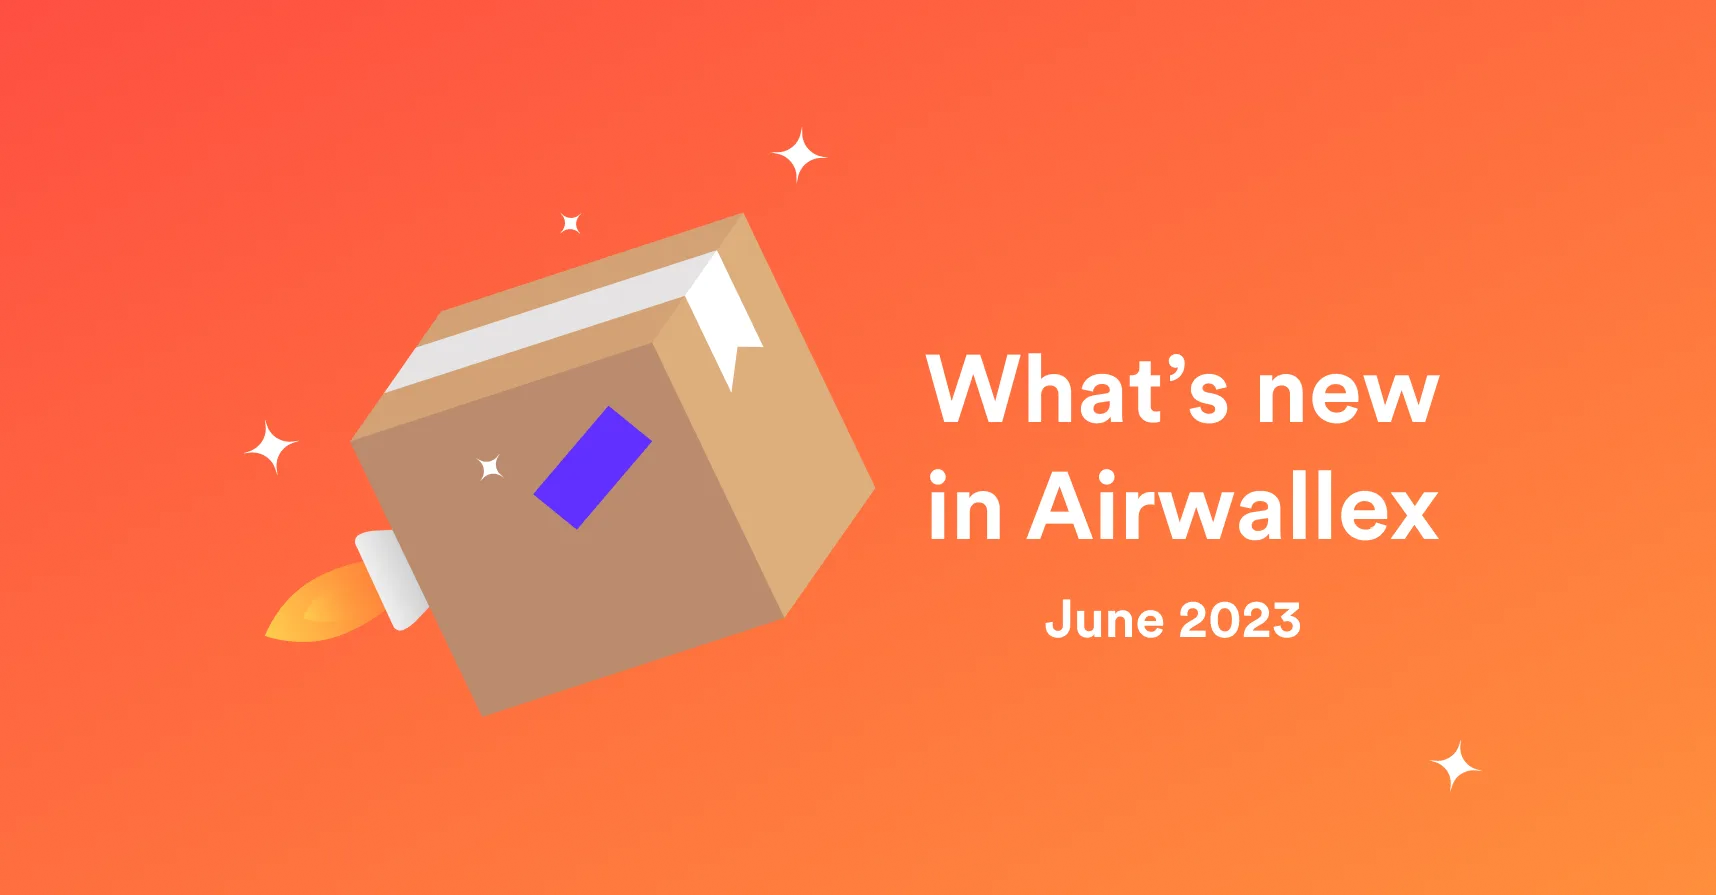 What's new in Airwallex - June 2023 image